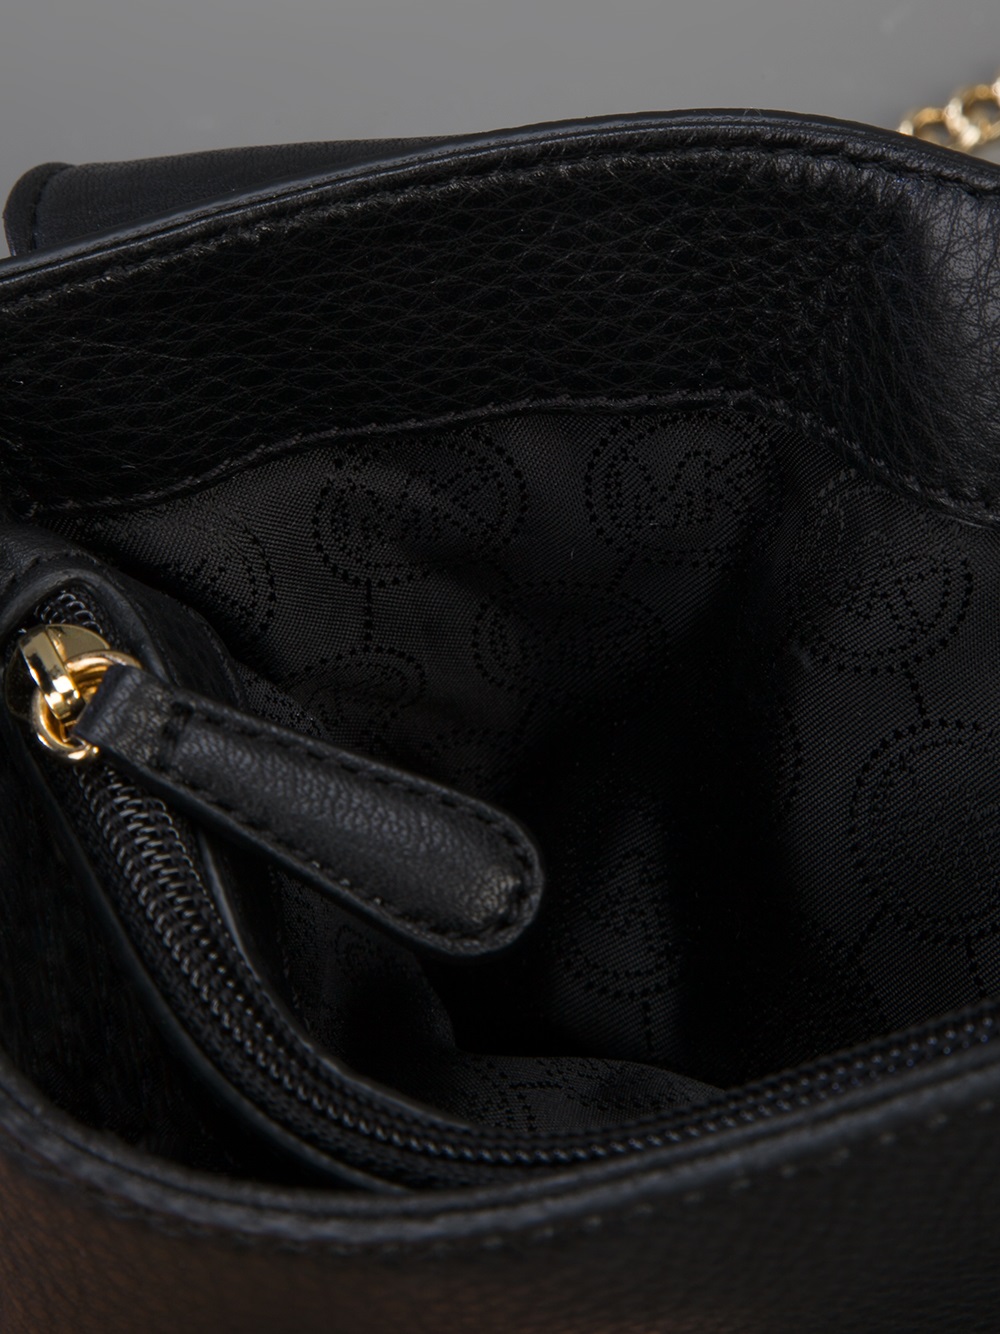 Michael Kors Chain Detail Shoulder Bag in Black - Lyst